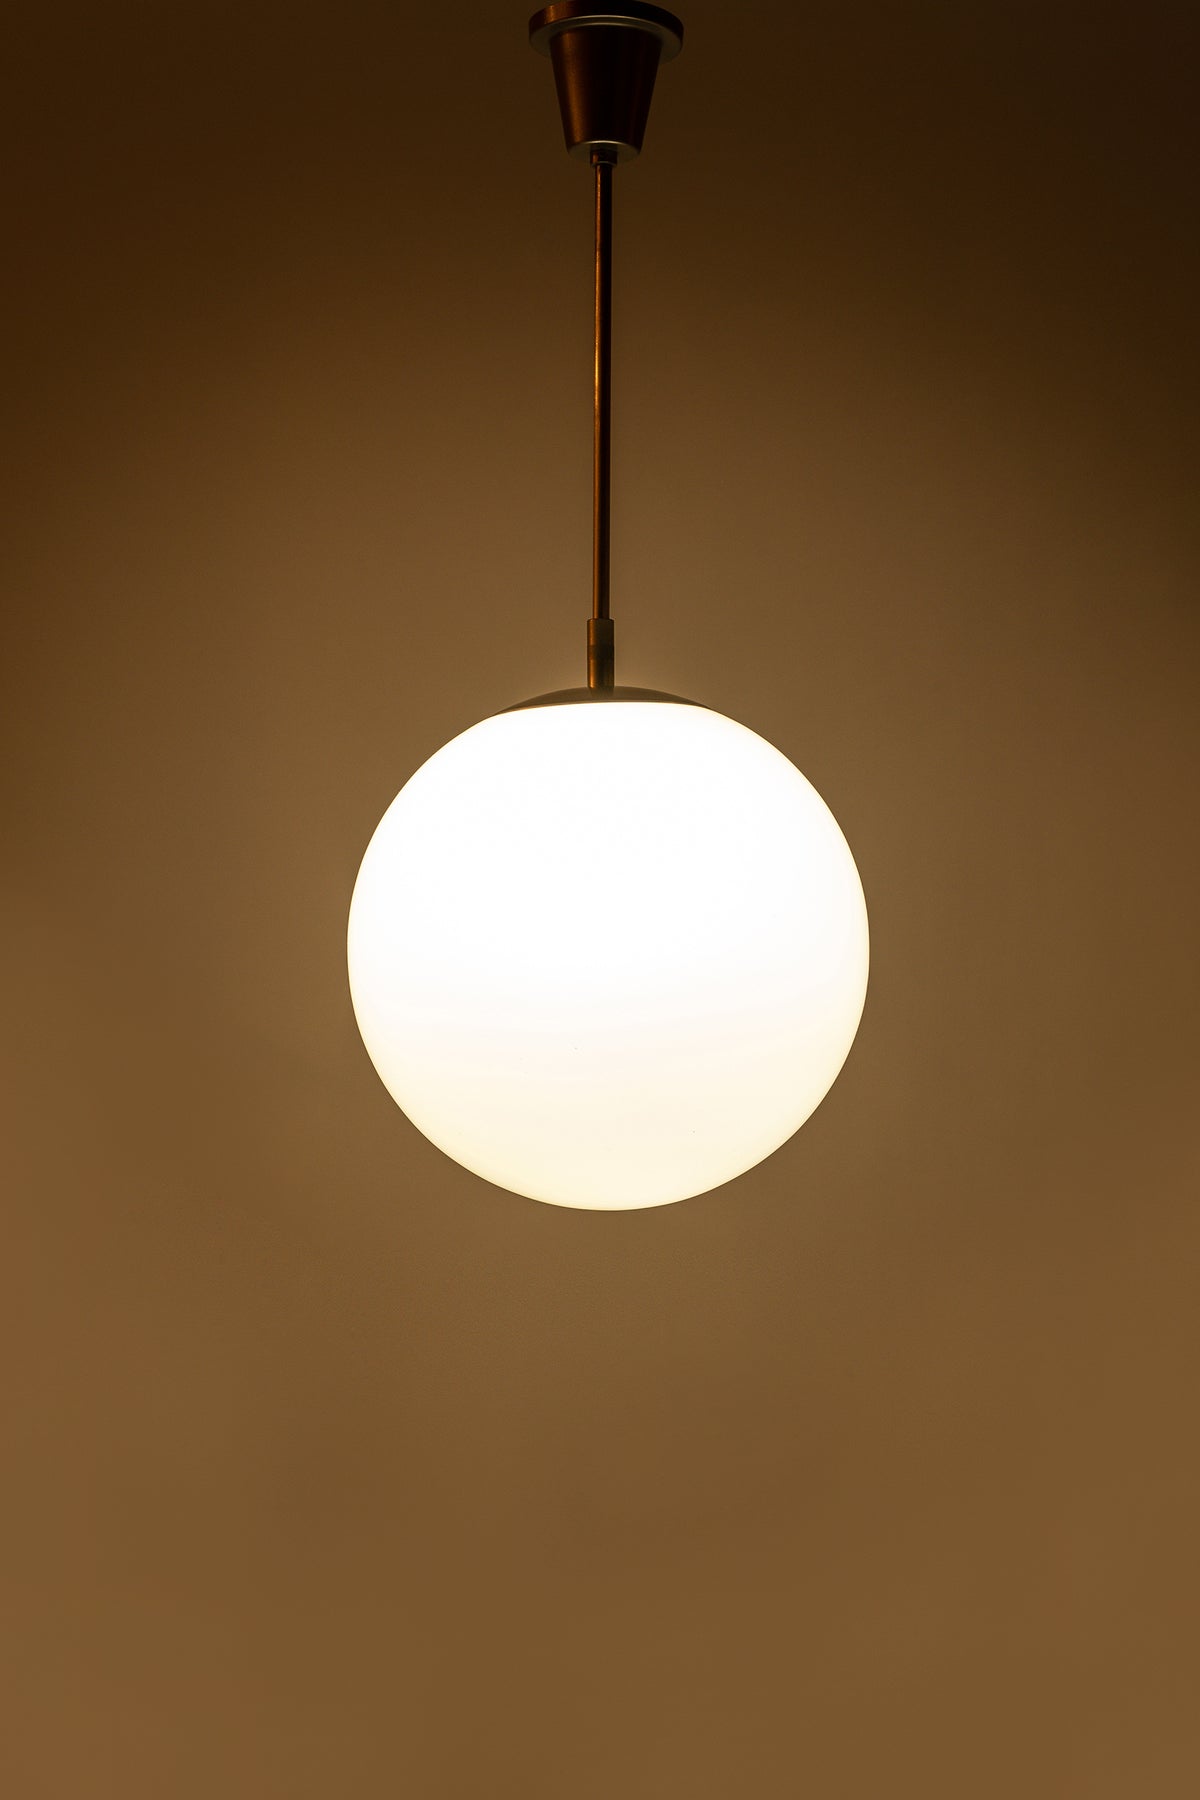 Ceiling Light, Bag Turgi, Bauhaus, 30s